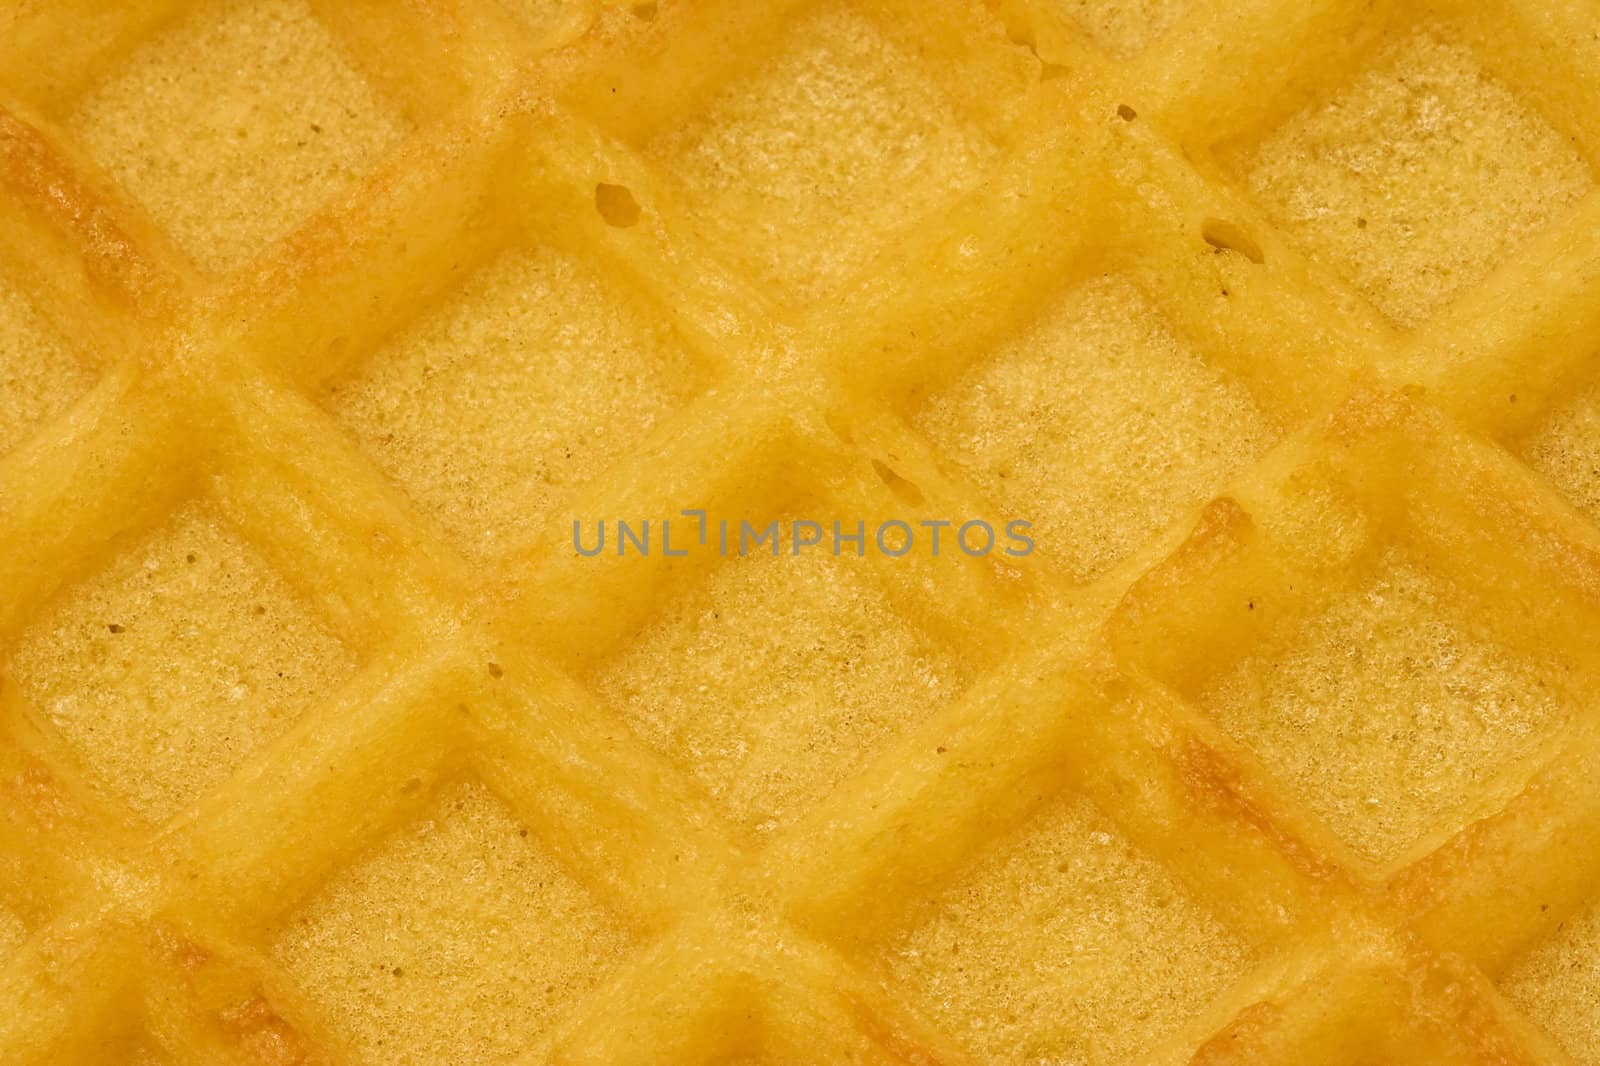 good morning breakfast waffles shot close-up detail